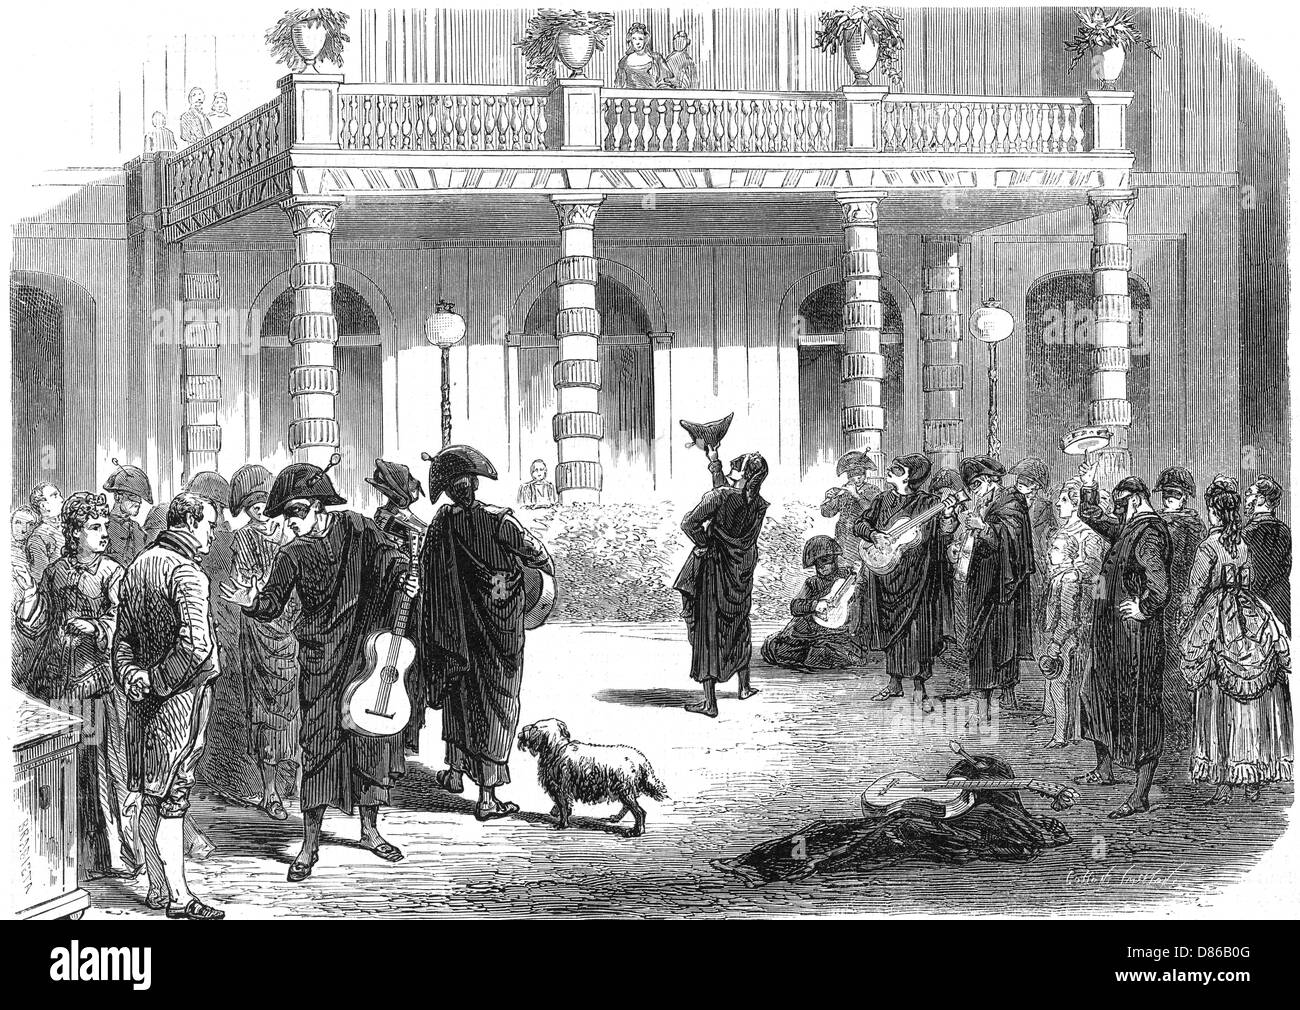 Musica di strada: Regina serenata, 1870 Foto Stock